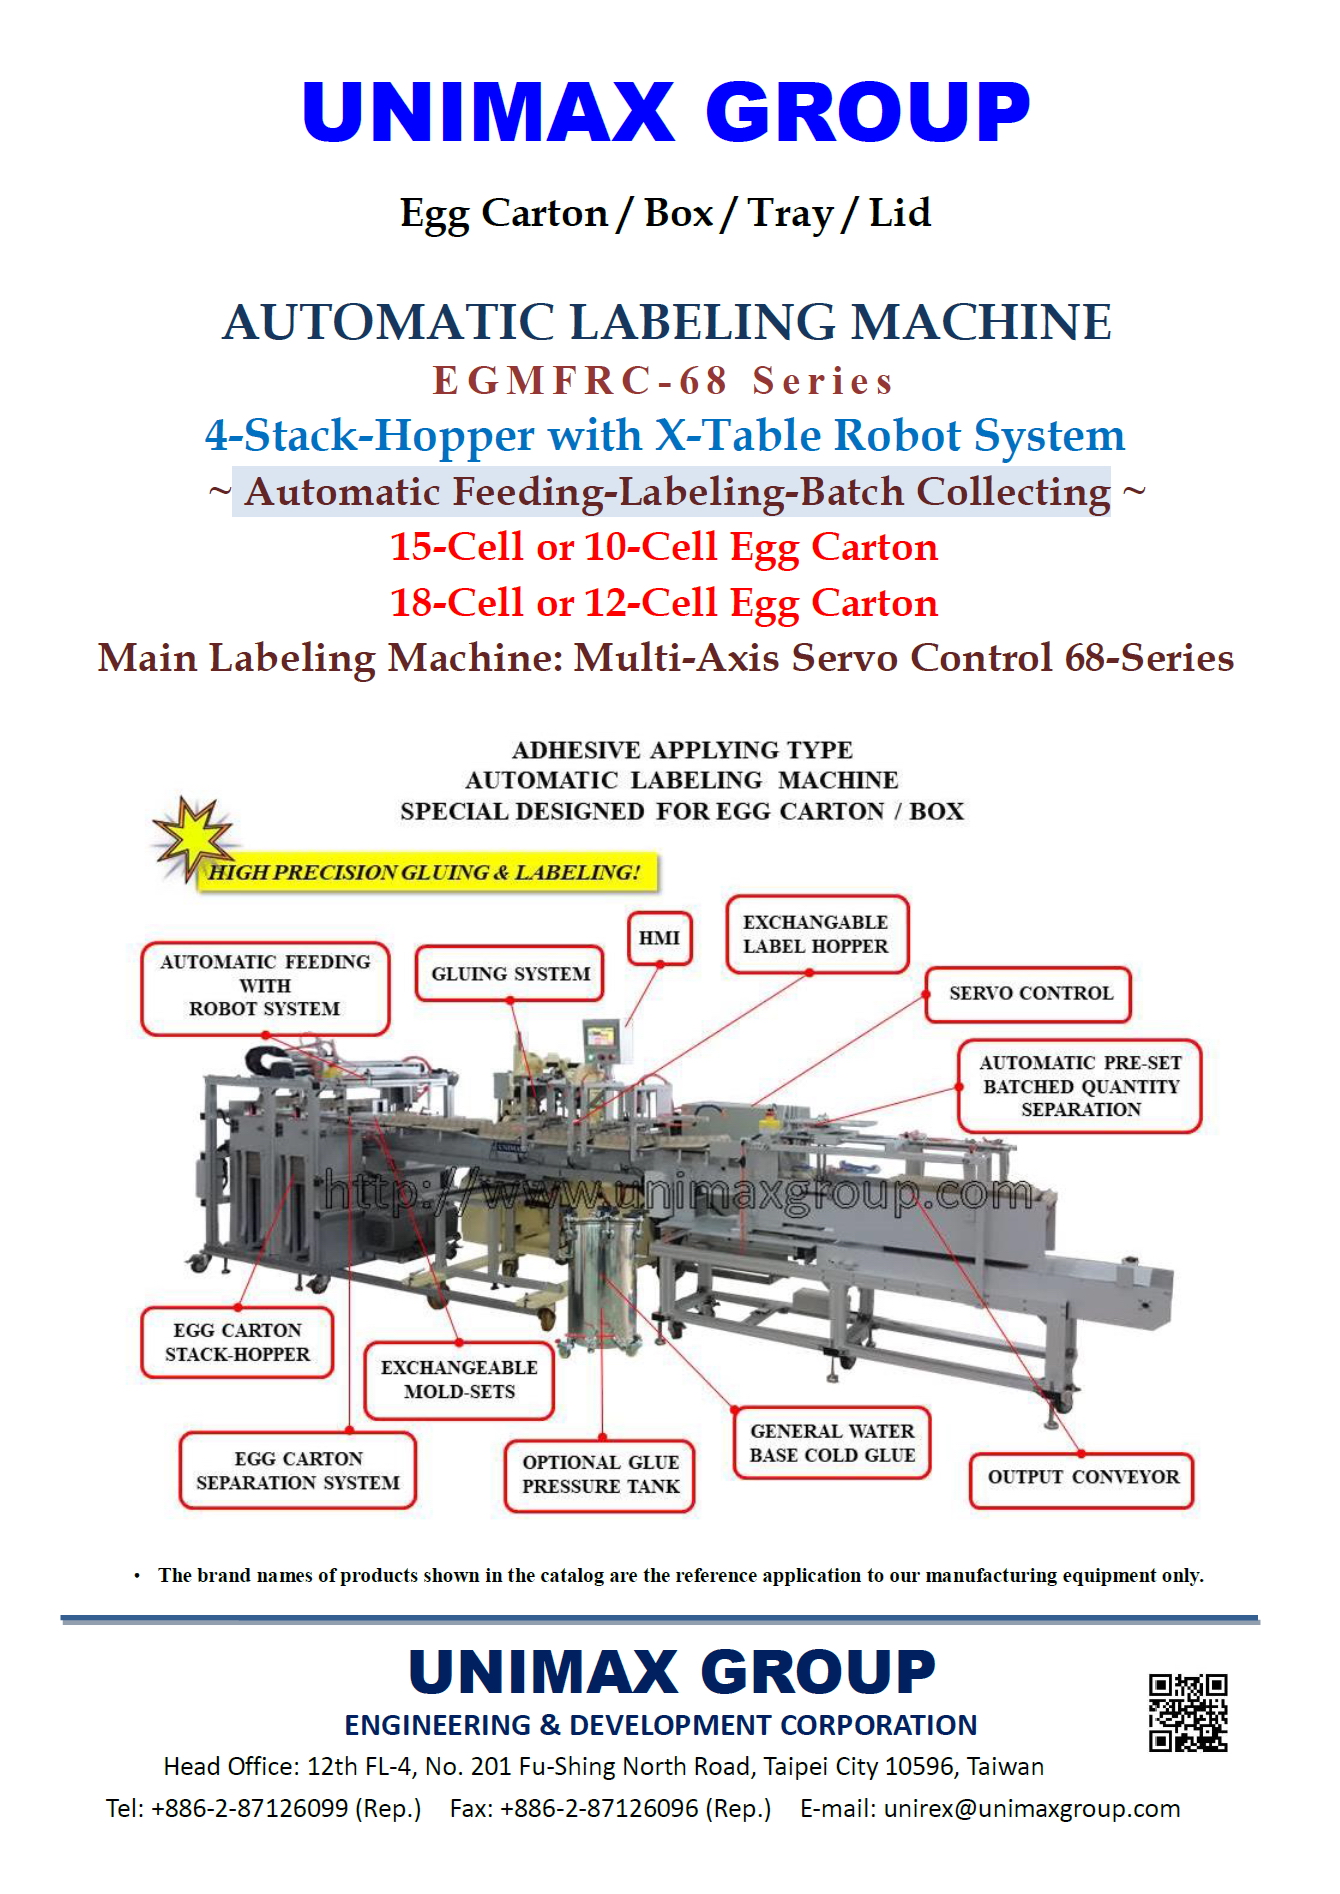 Paper Egg Carton Labeling Machine EGMFRC-68 (166)